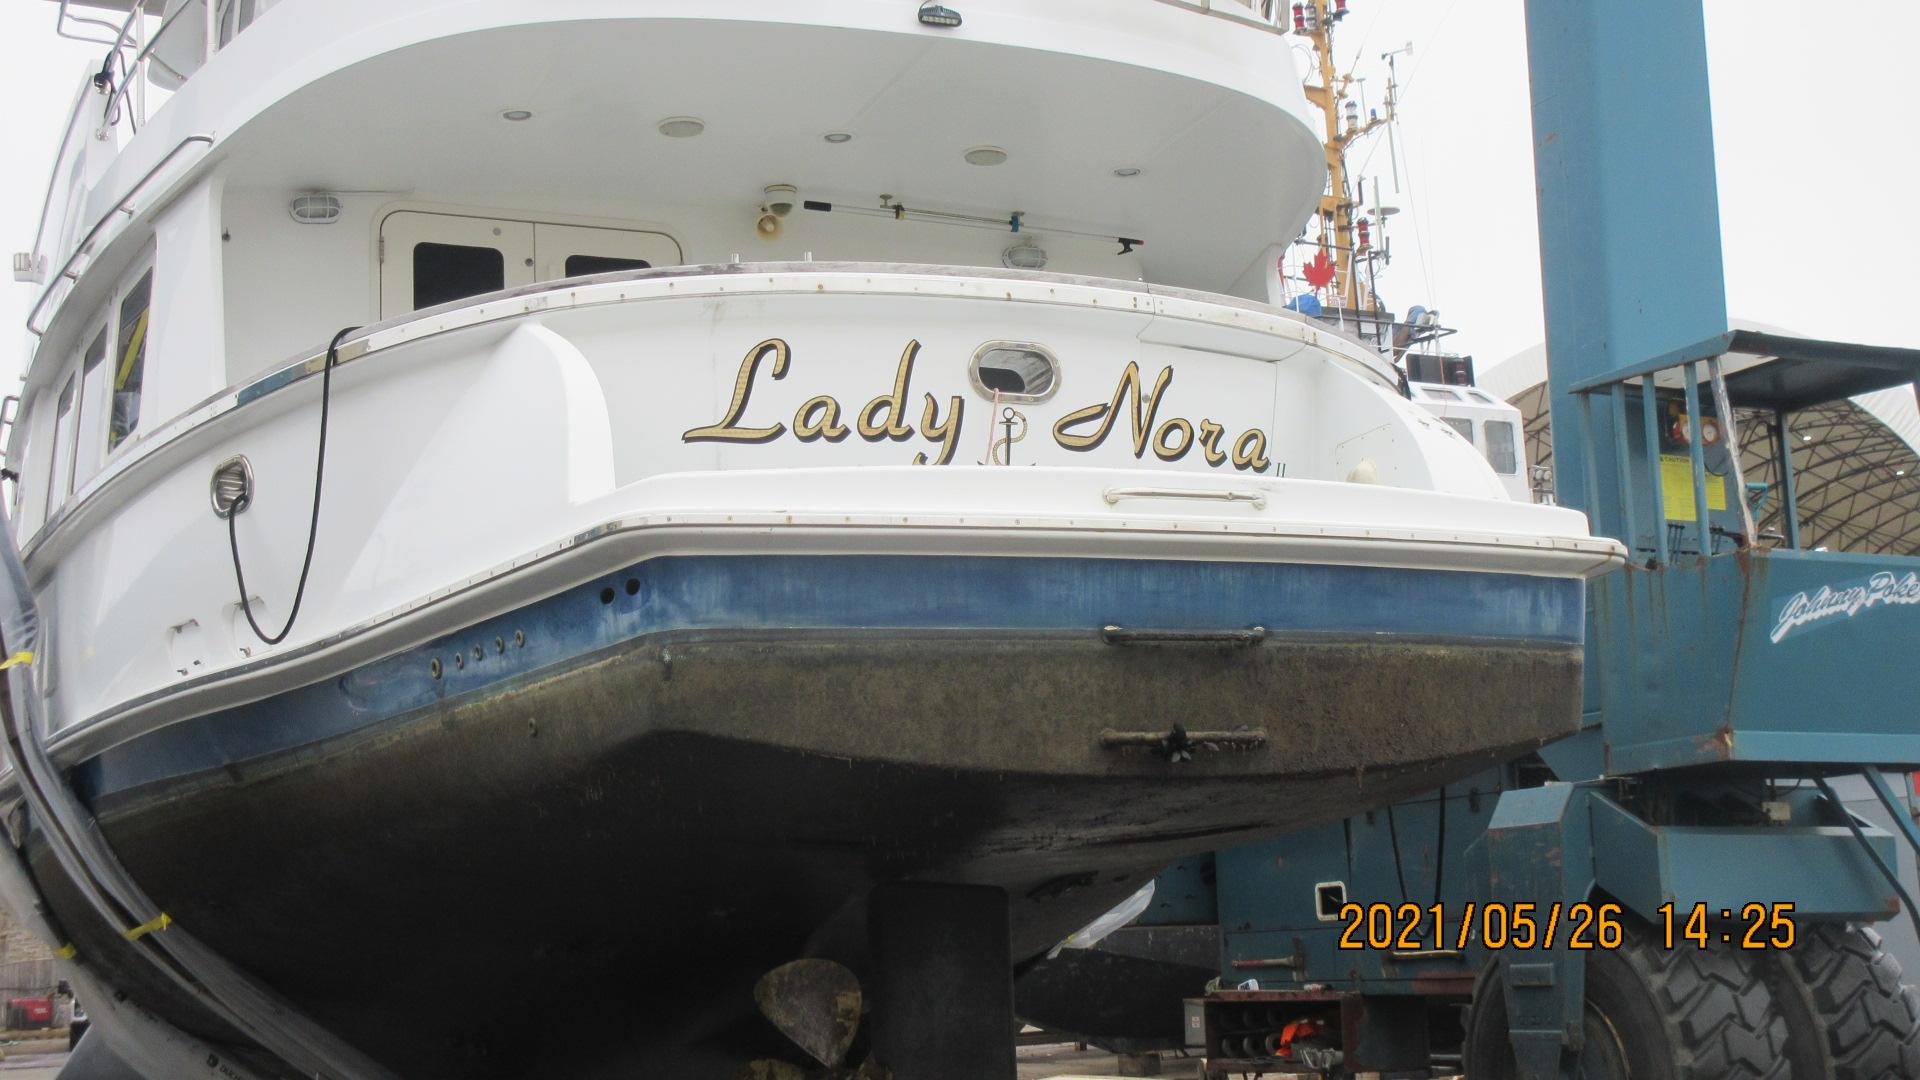 Lady Nora II Yacht Photos Pics 